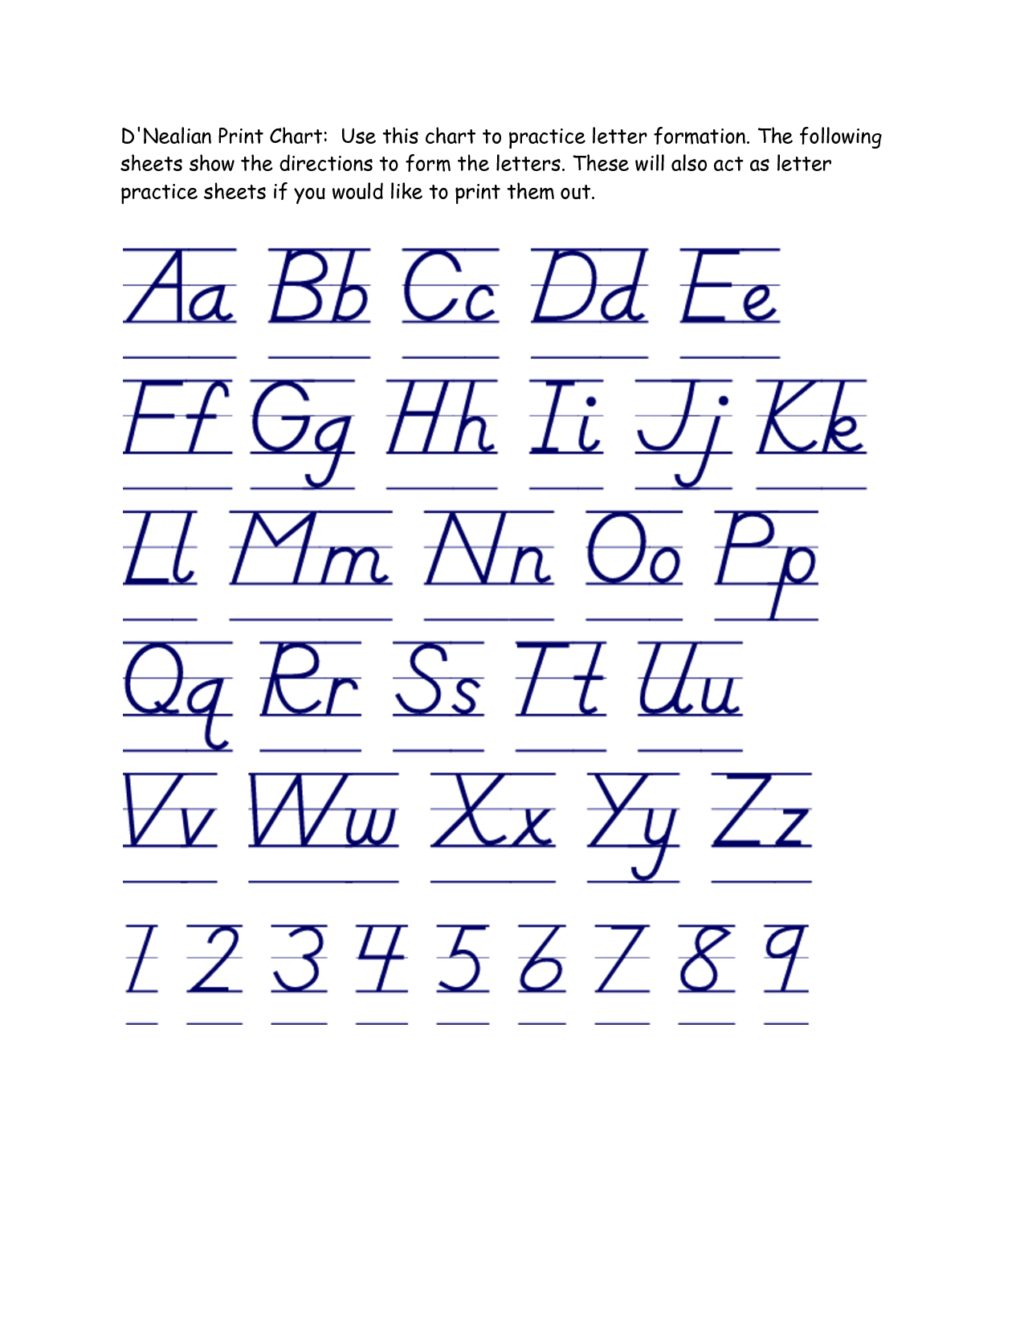 Worksheet ~ Handwriting Practice Worksheets Dnealian inside D'nealian Alphabet Tracing Worksheets